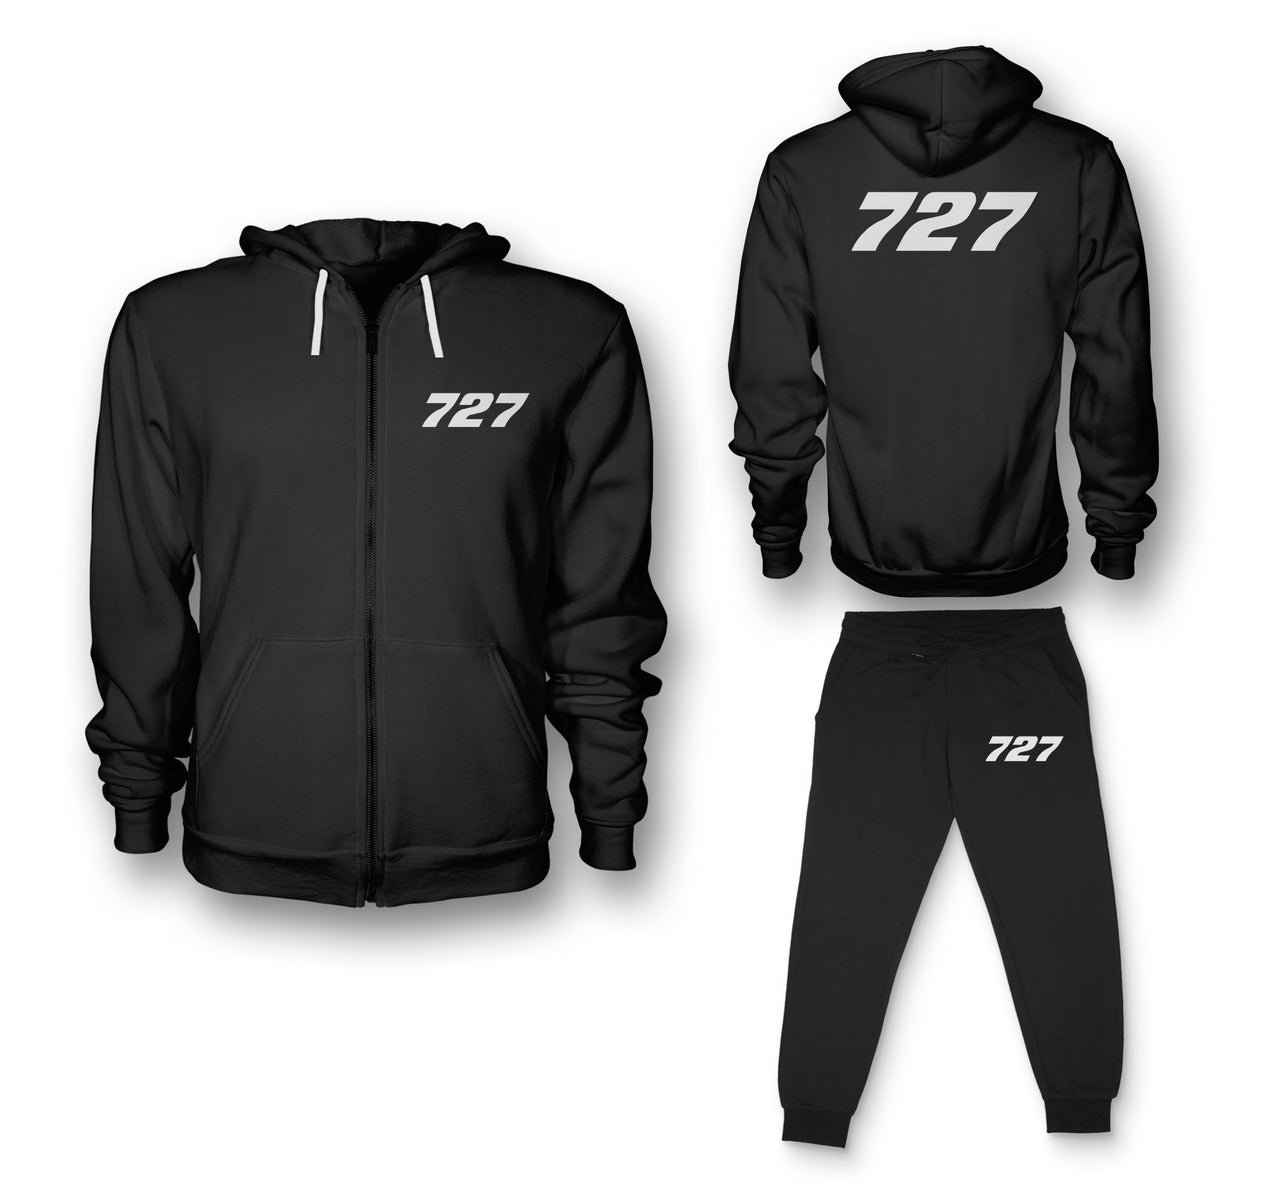 727 Flat Text Designed Zipped Hoodies & Sweatpants Set